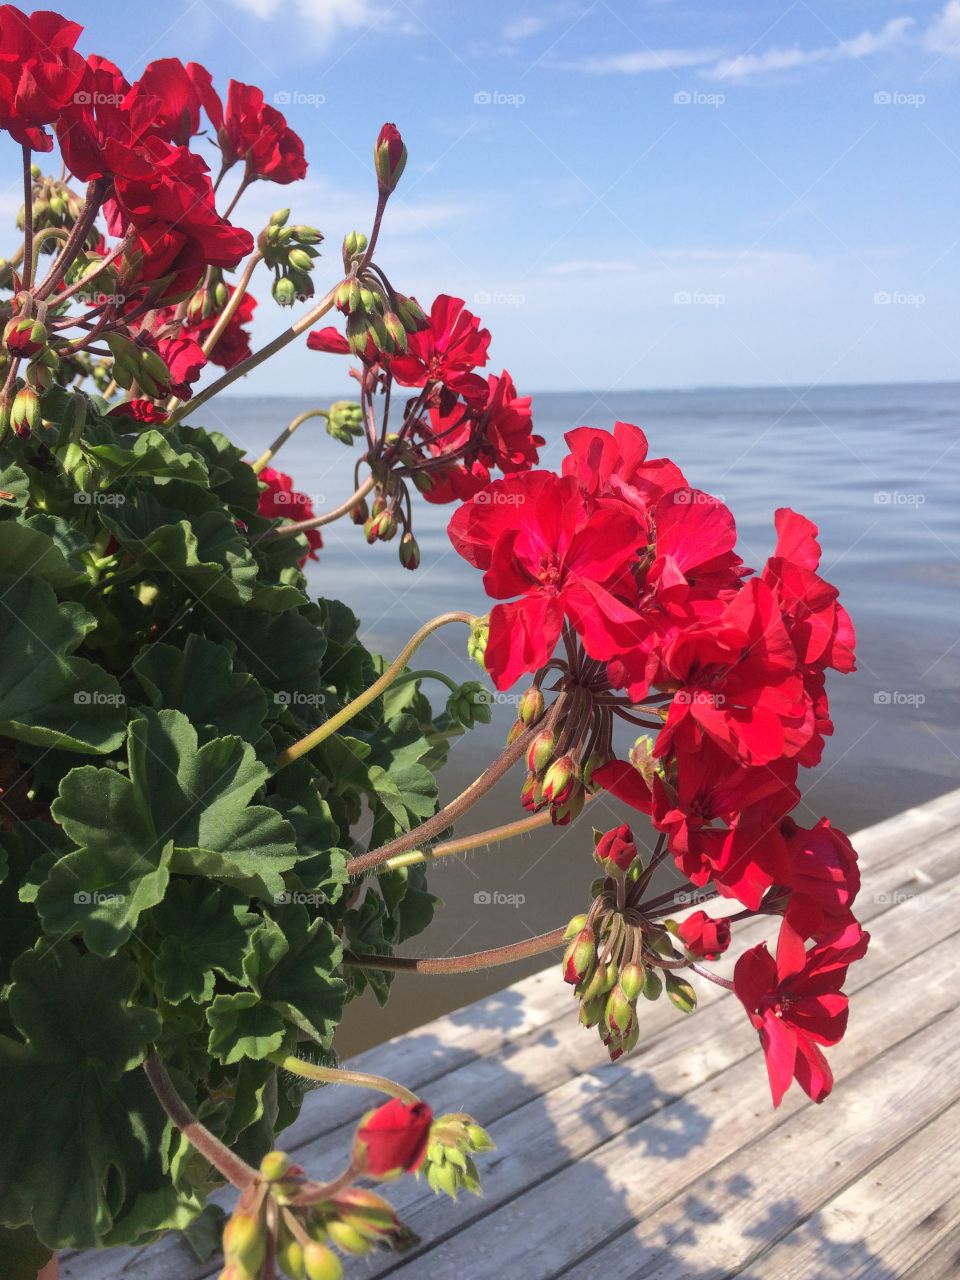 Flower near the bay